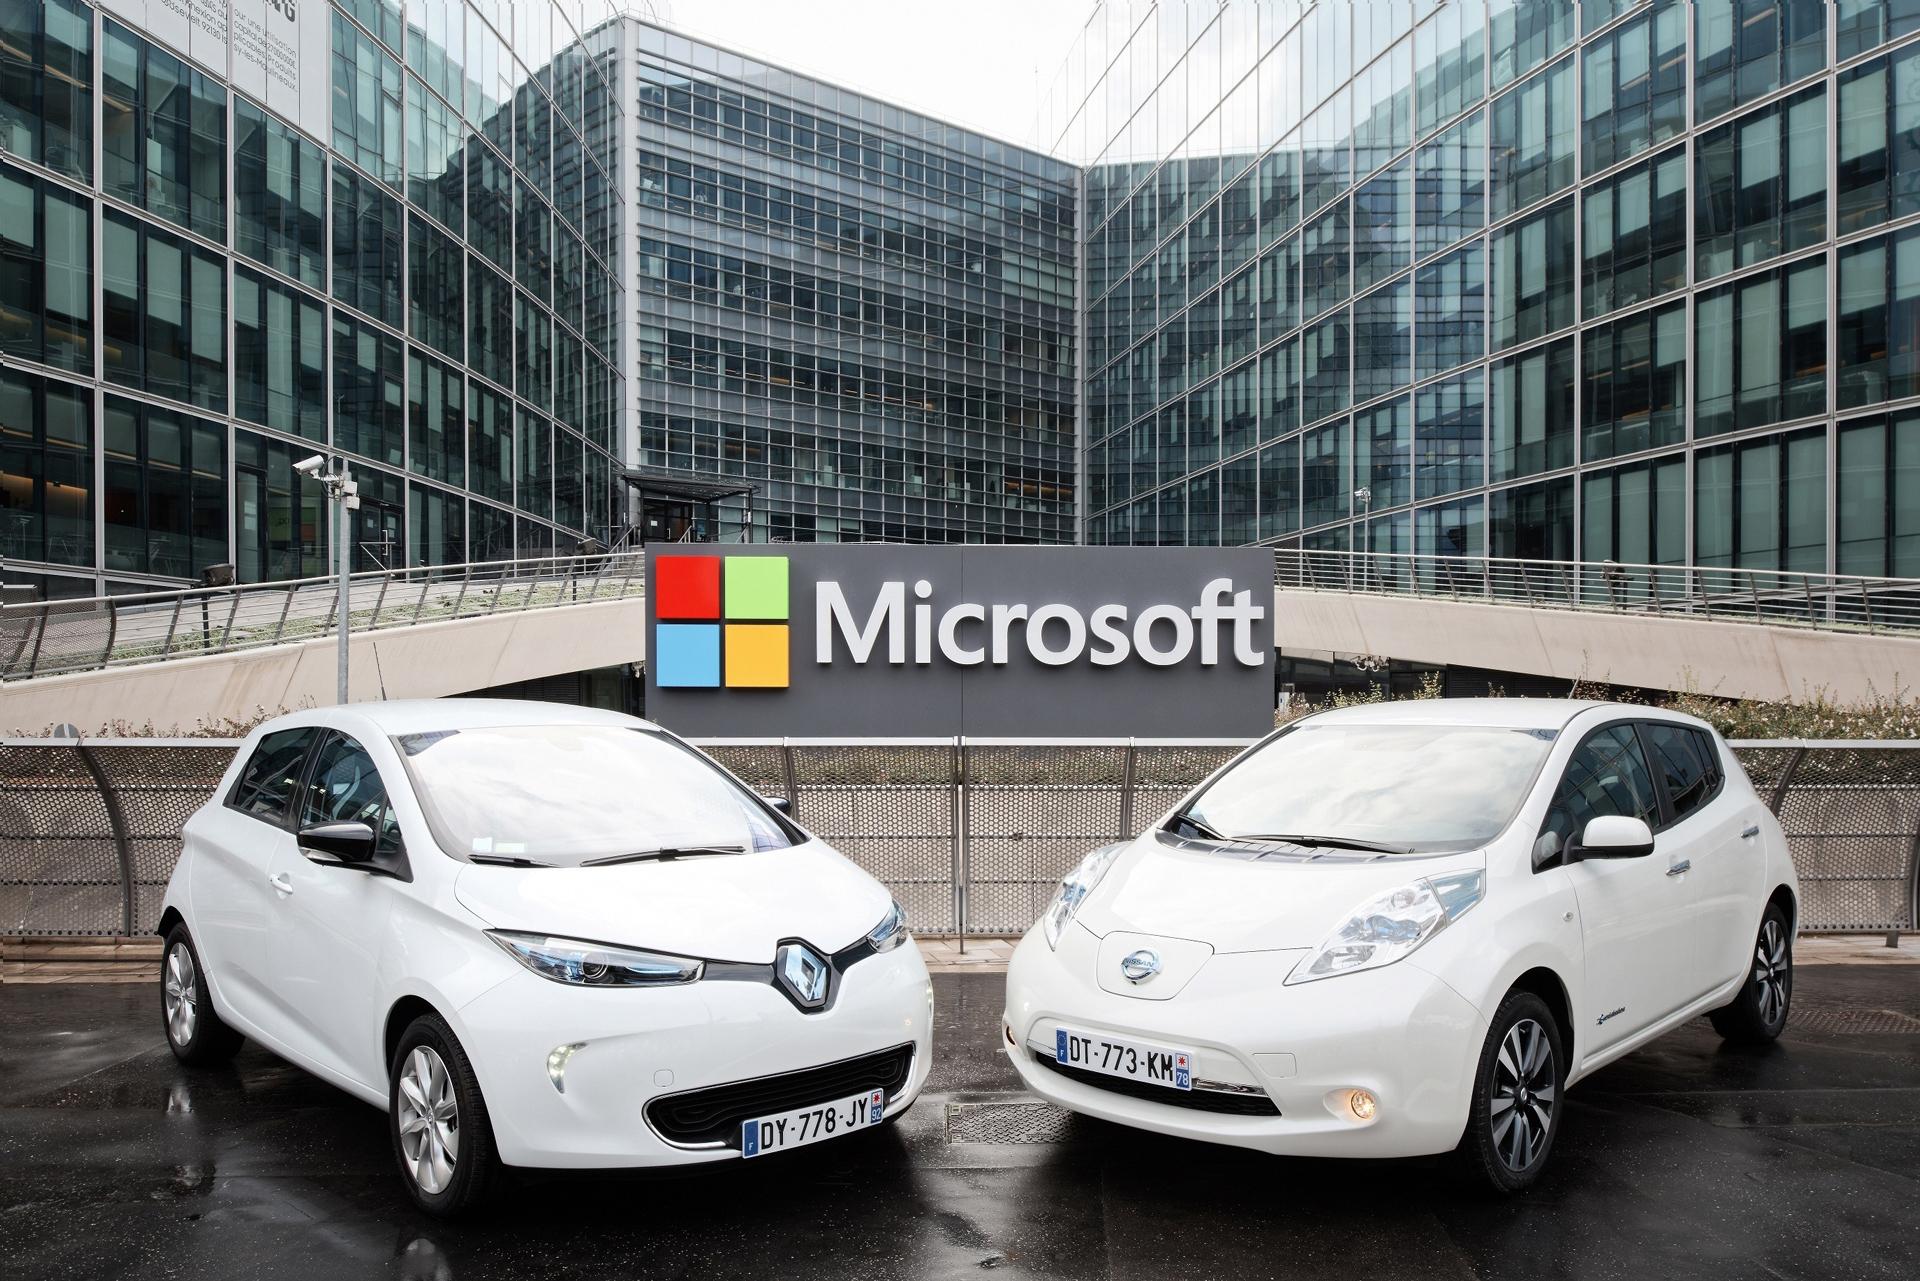 Microsoft - Alliance Renault-Nissan - team up - photo via Renault Group